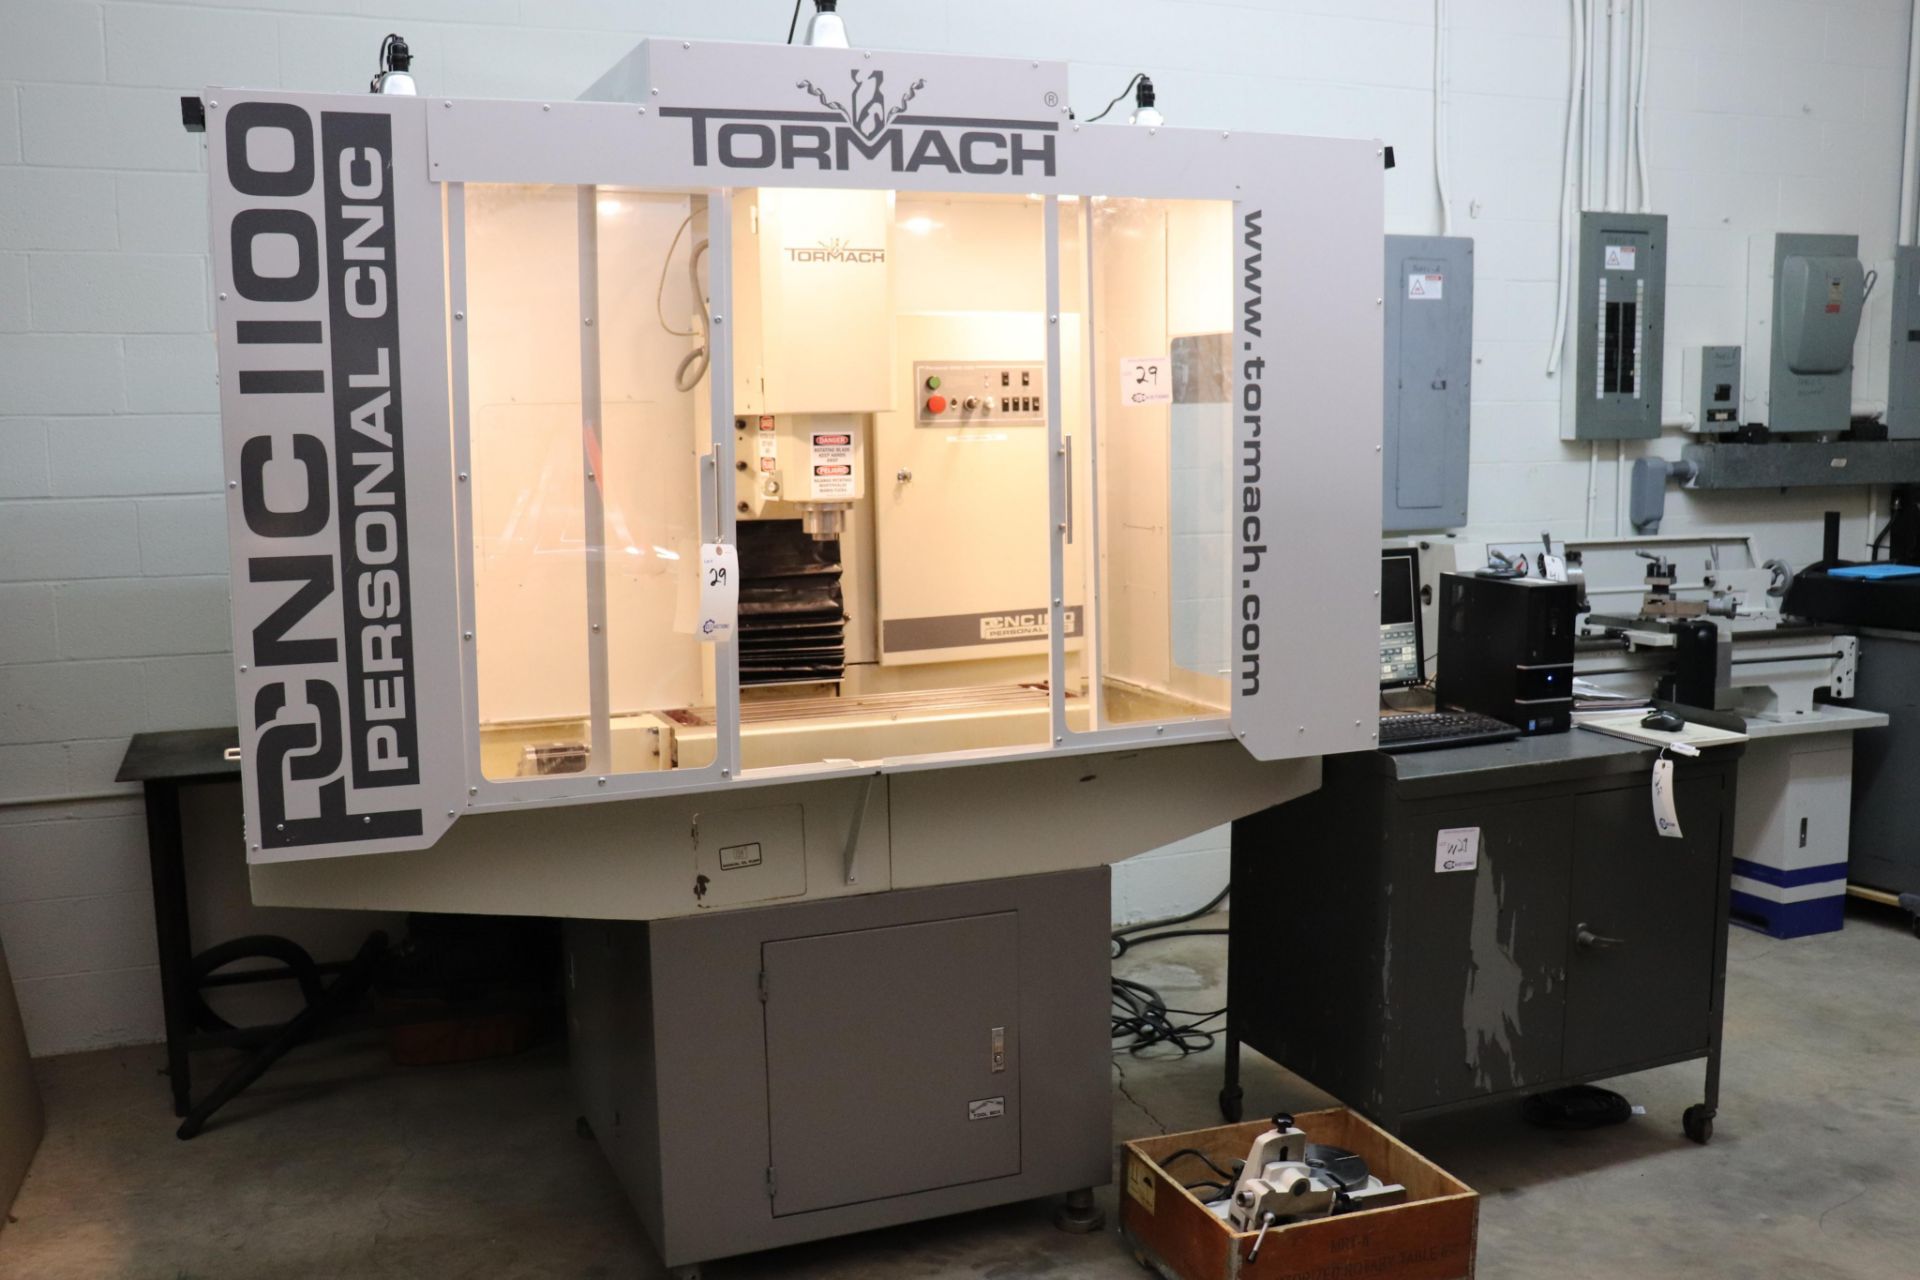 Tormach PCNC 1100 CNC milling machine w/ 4th axis